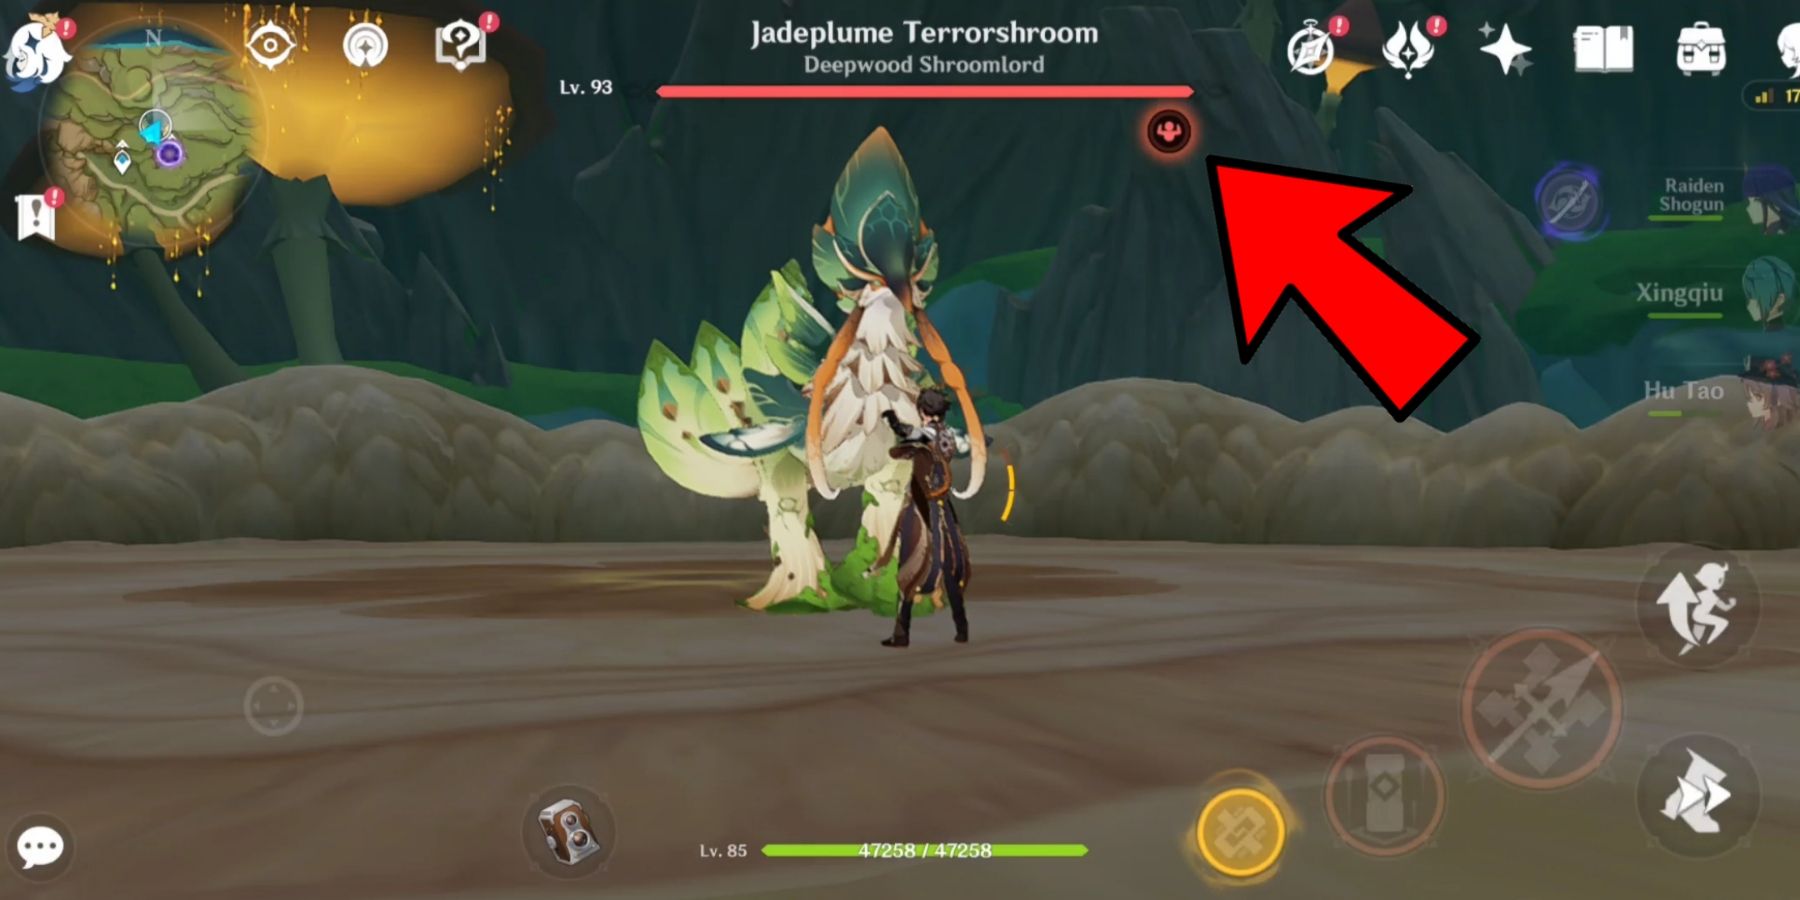 jadeplume terrorshroom fury count Genshin Impact 